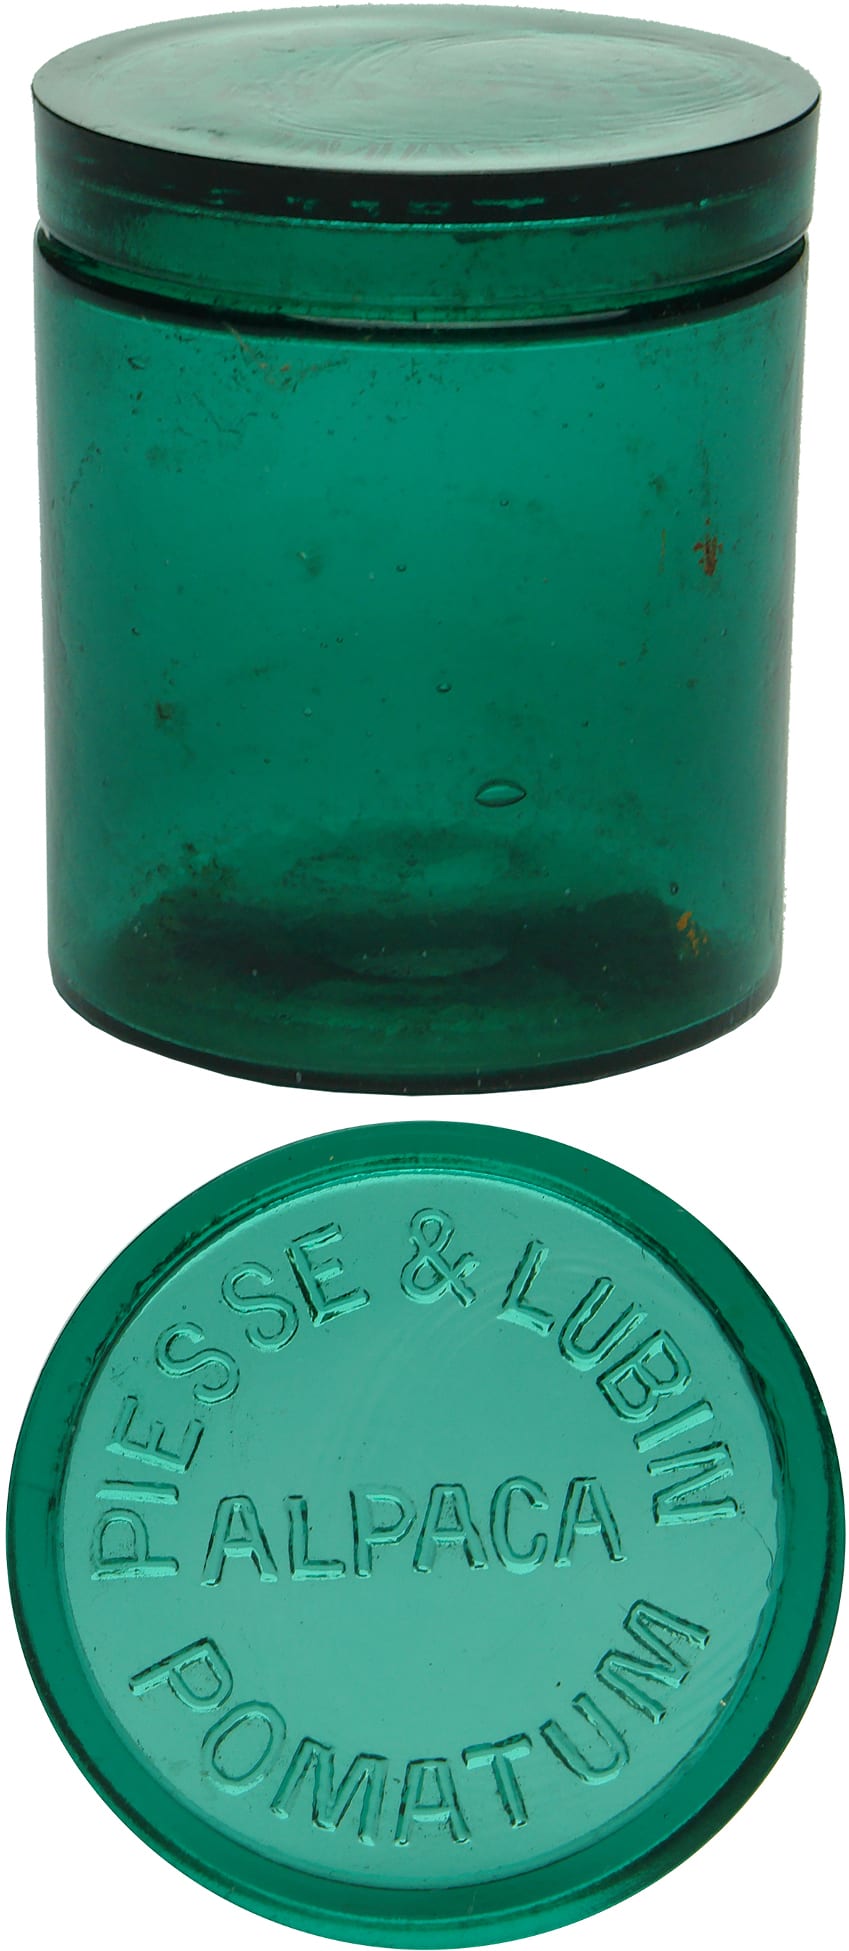 Piesse Lubin Alpaca Pomatum Green Glass Jar